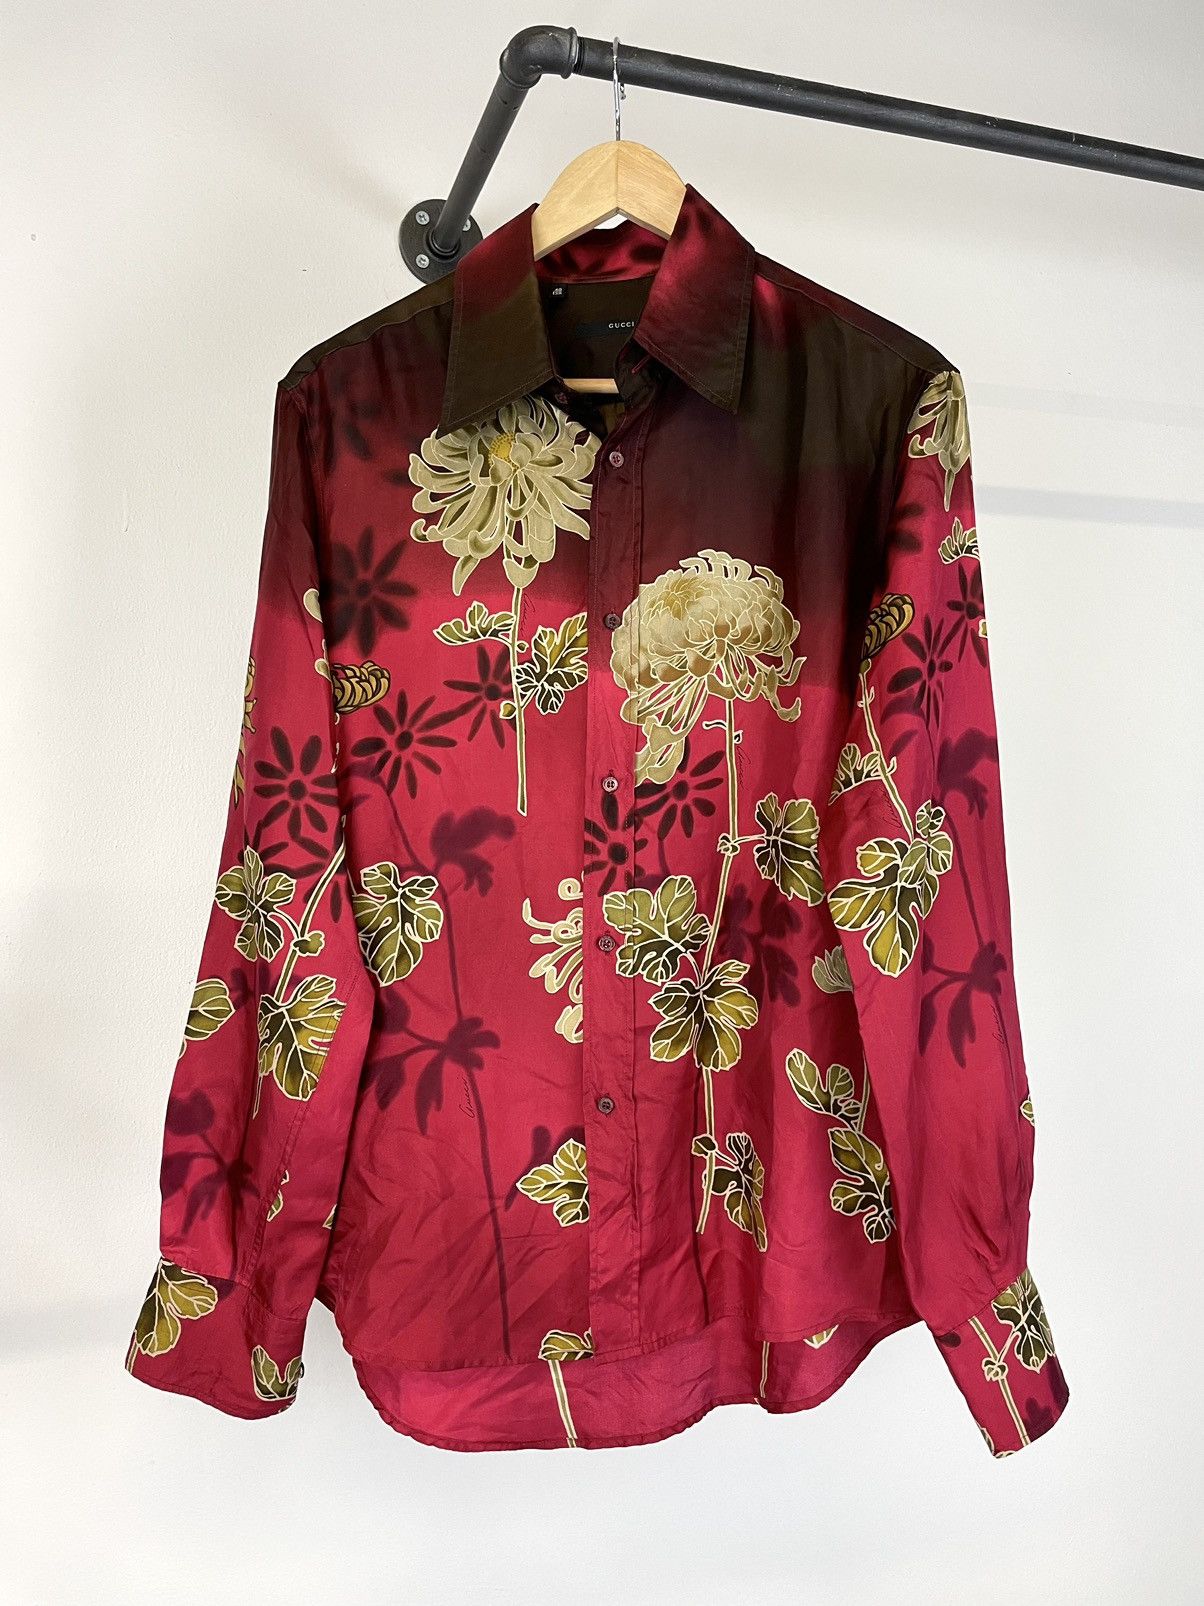 Gucci SS2001 Tom Ford Chrysanthemum floral Print Silk Shirt rare Size US M / EU 48-50 / 2 - 2 Preview